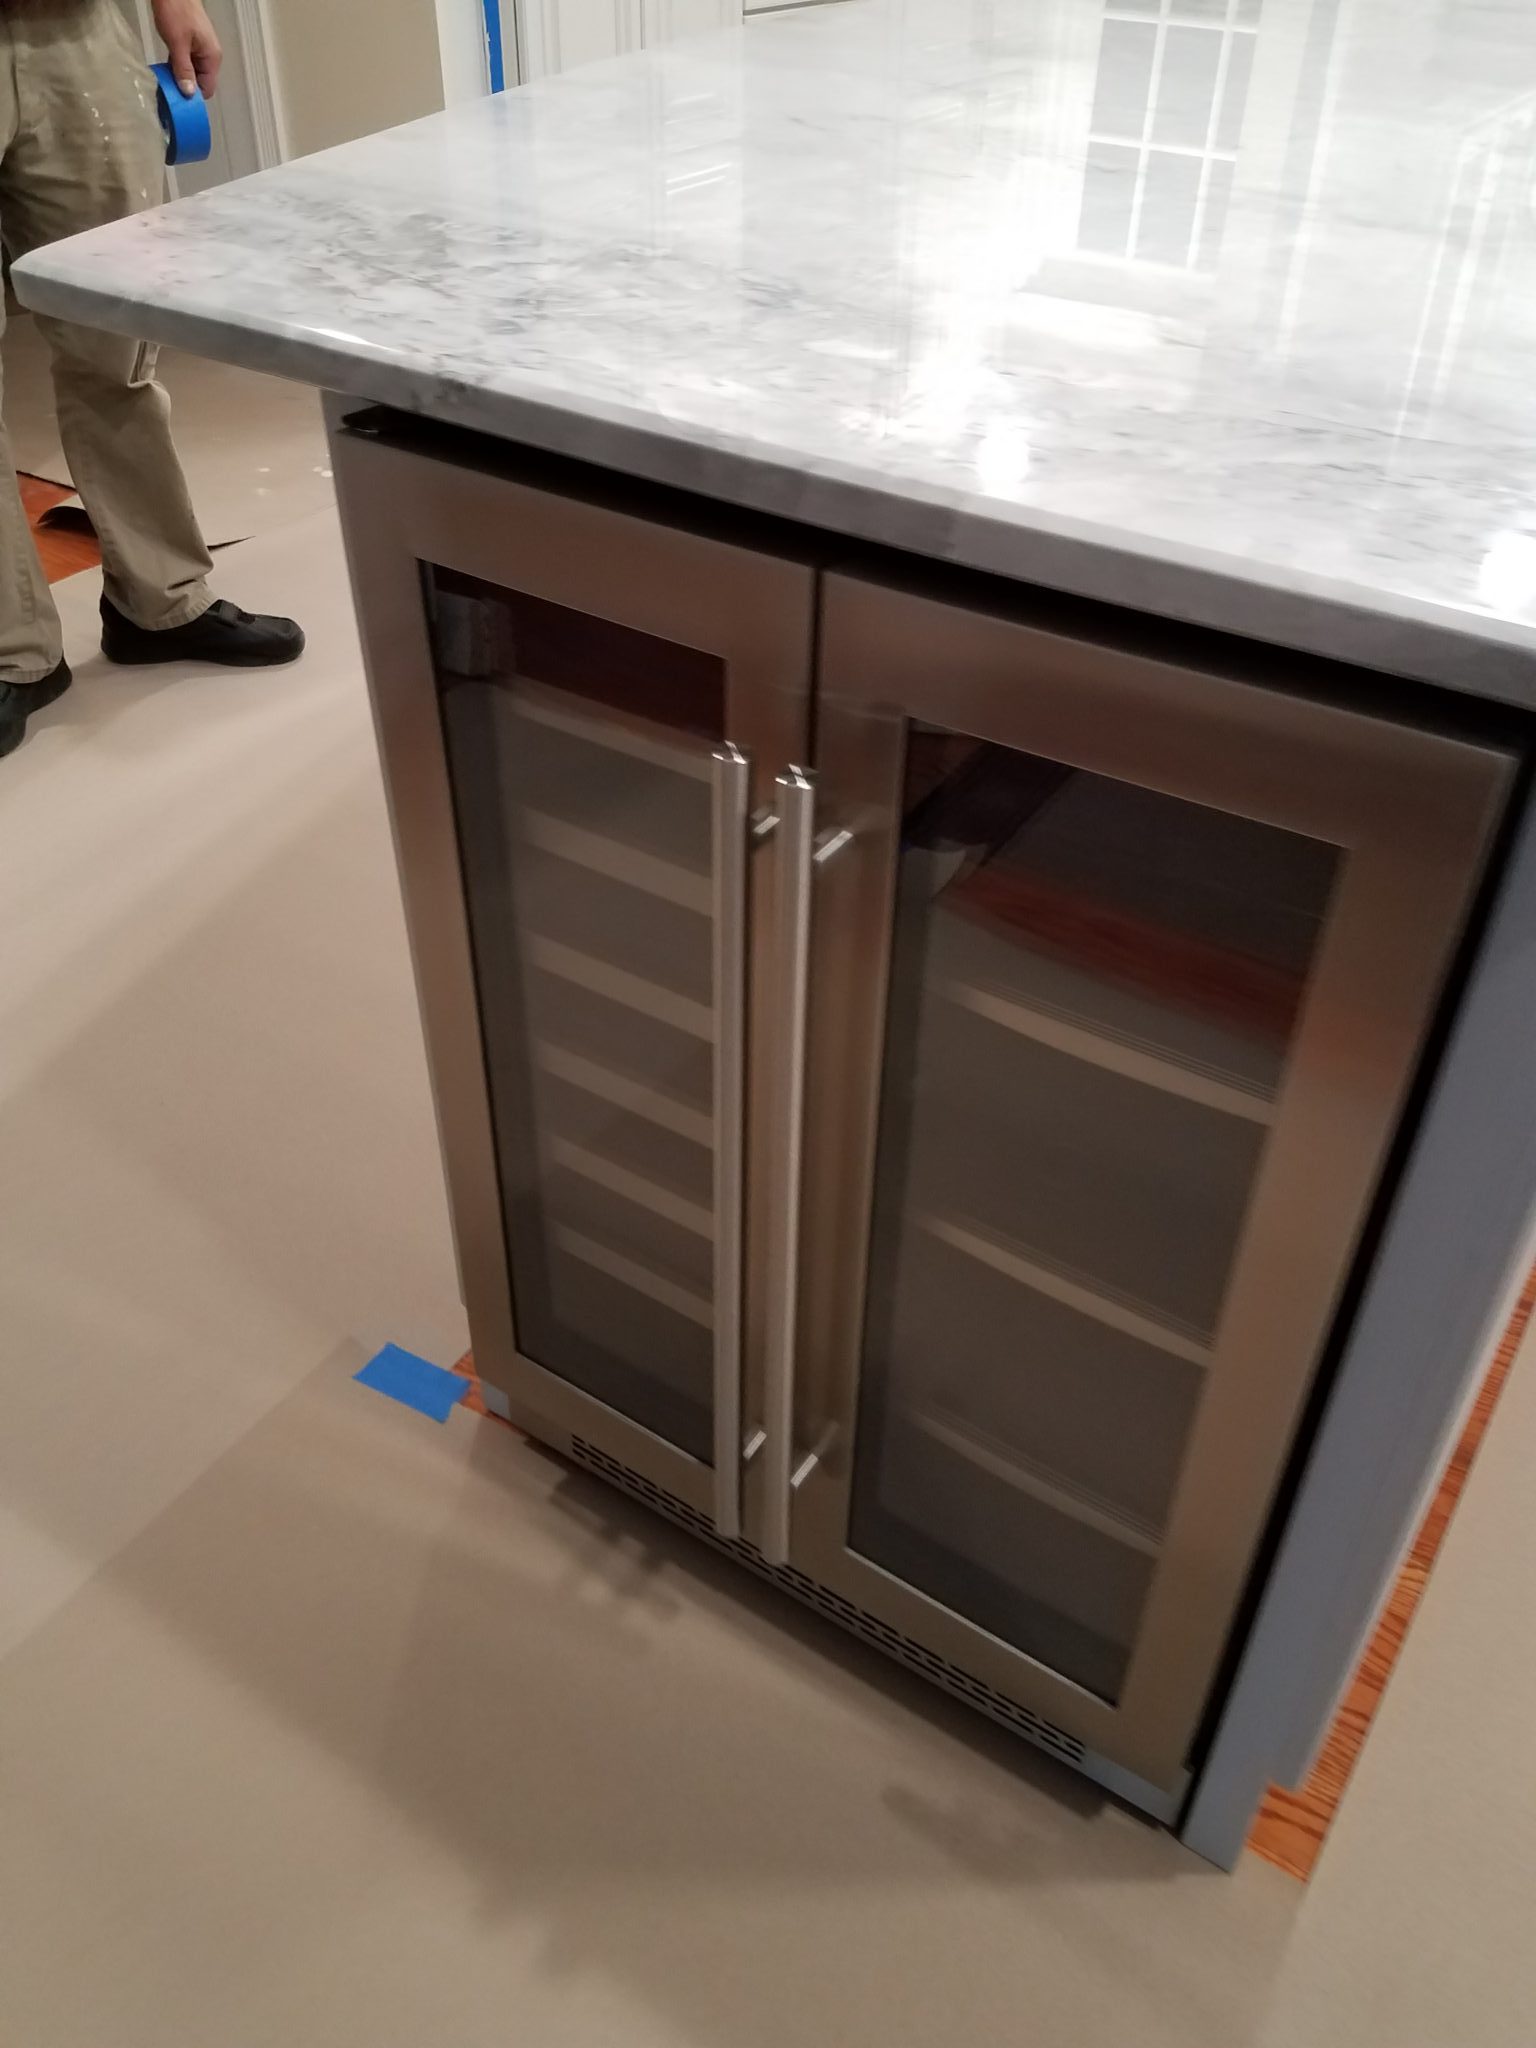 Custom 65k Kitchen Remodel White Raise Panel